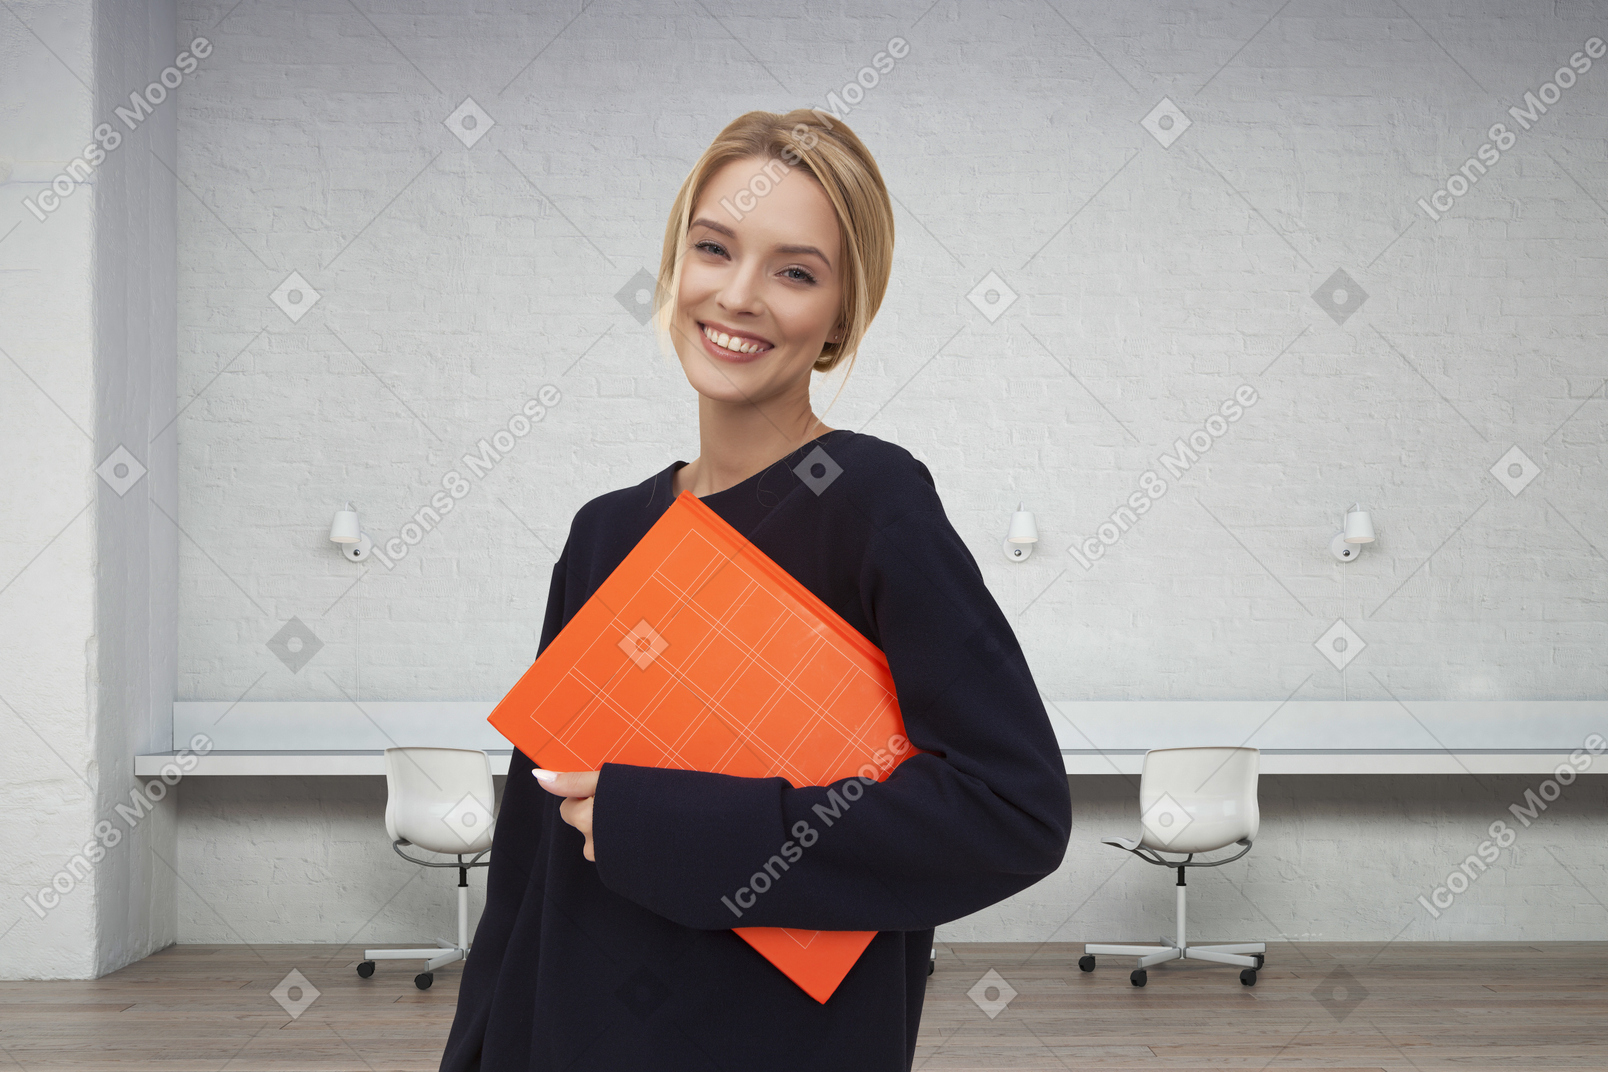 Woman holding a file folder